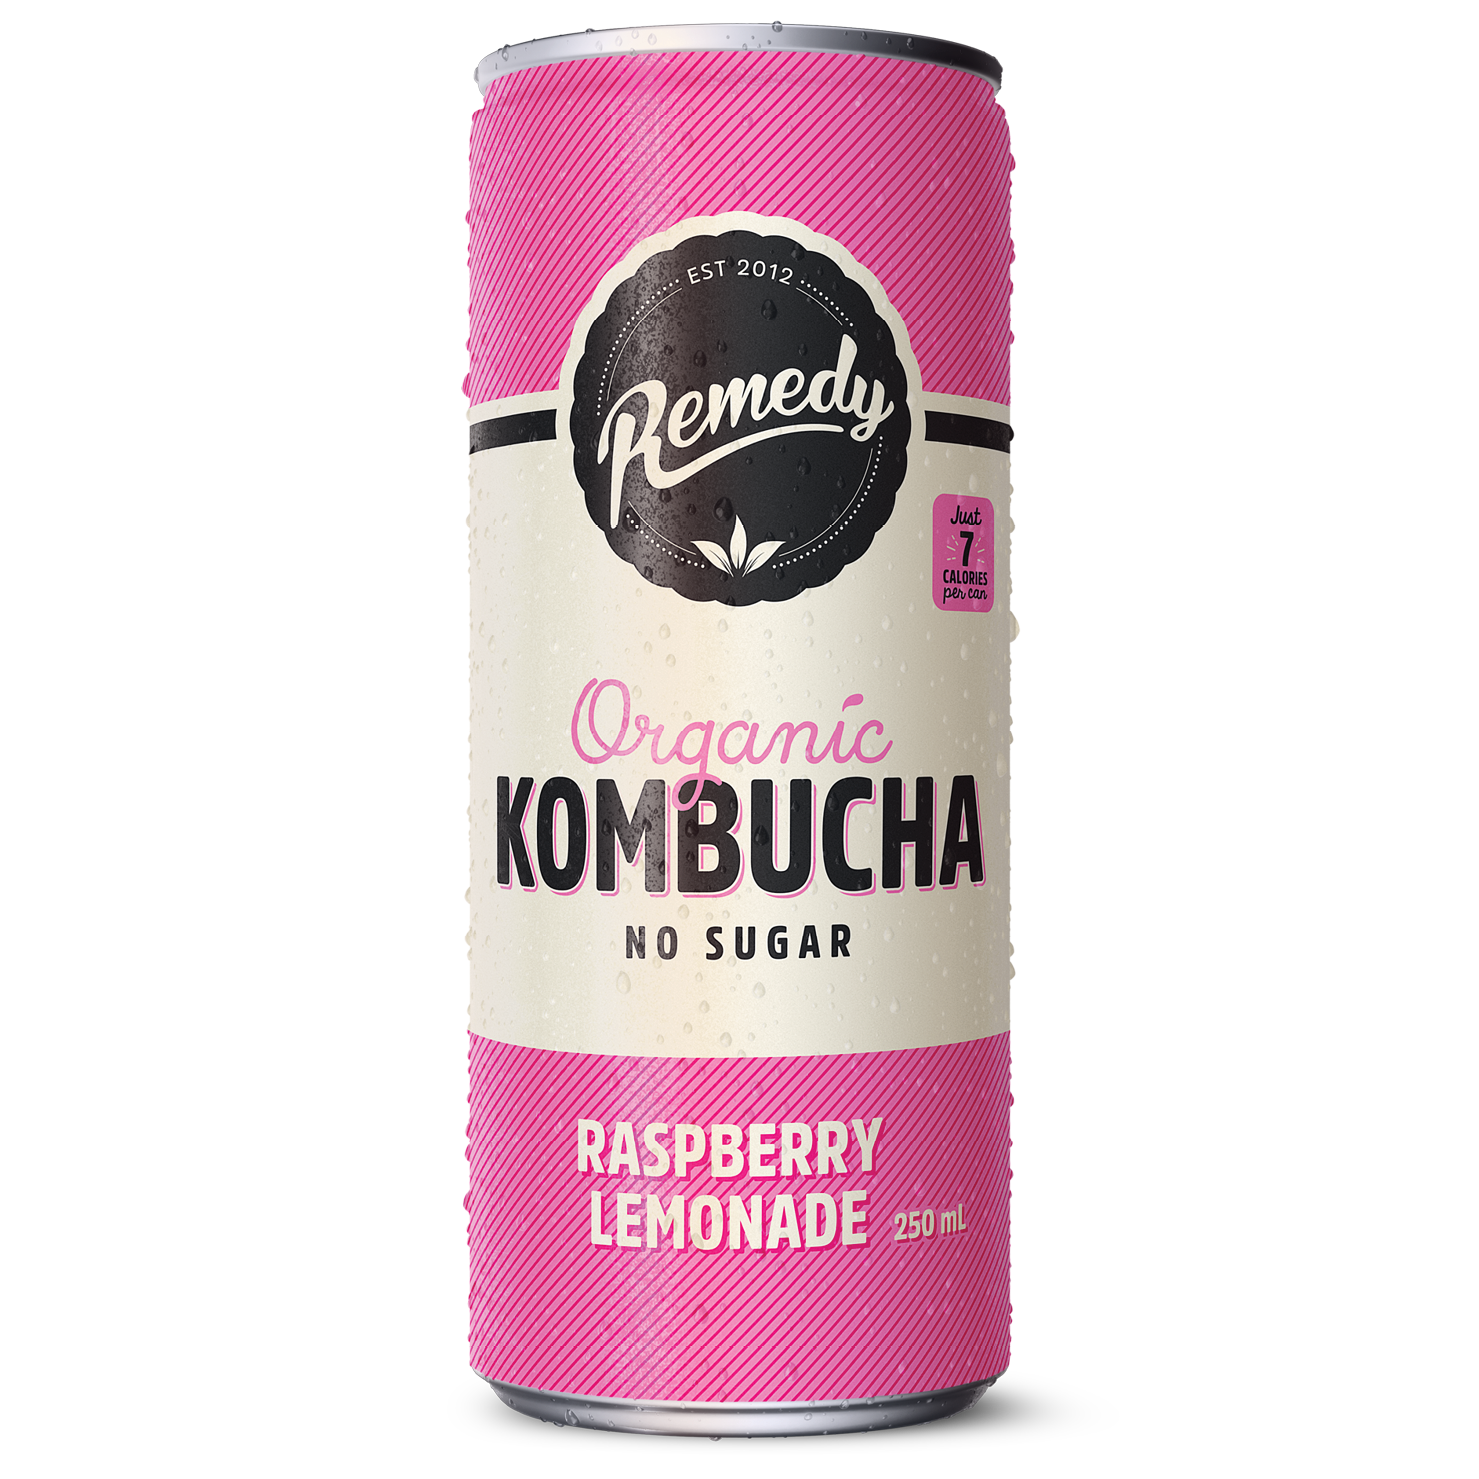 Remedy Kombucha Raspberry Lemonade